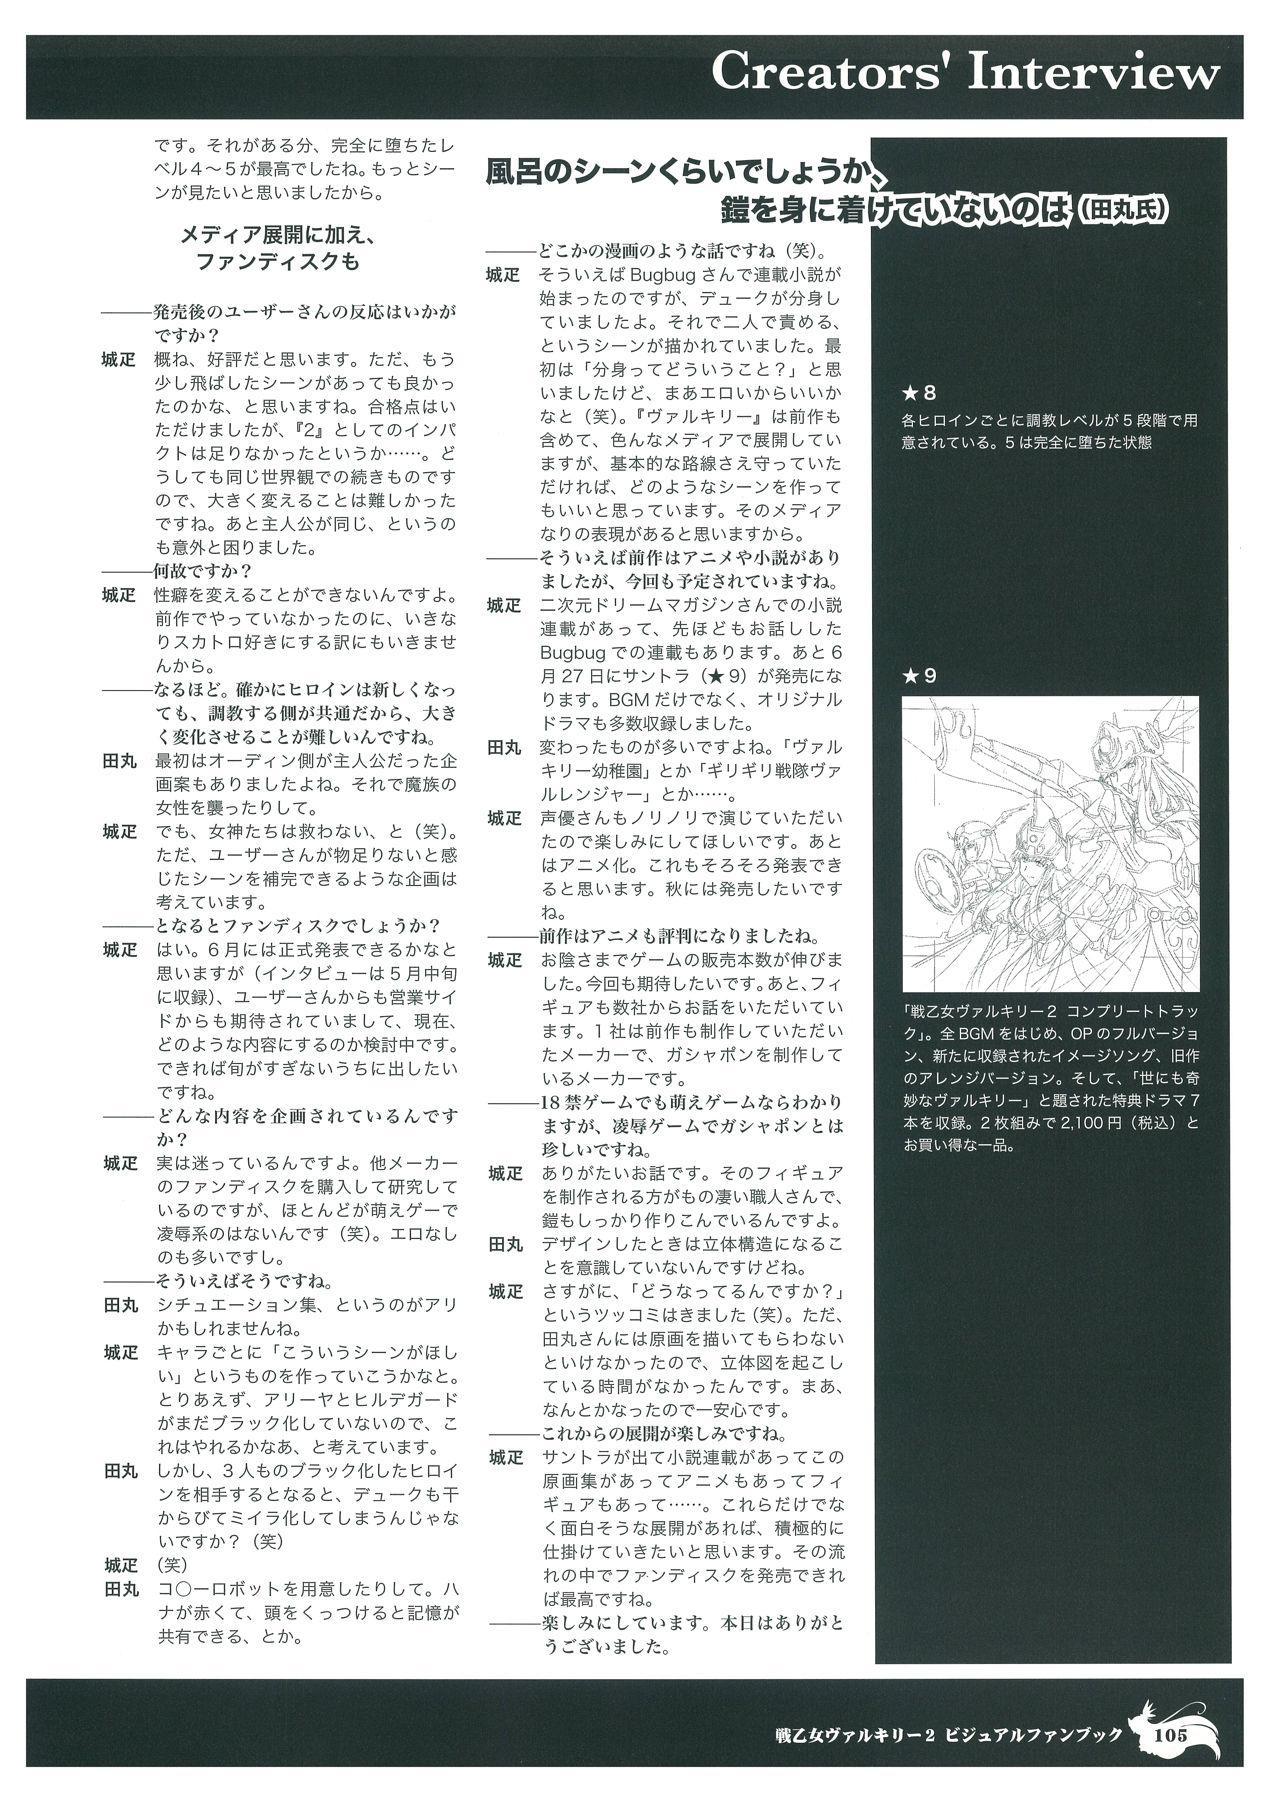 Ikusa Otome Valkyrie 2 Visual Fanbook 106